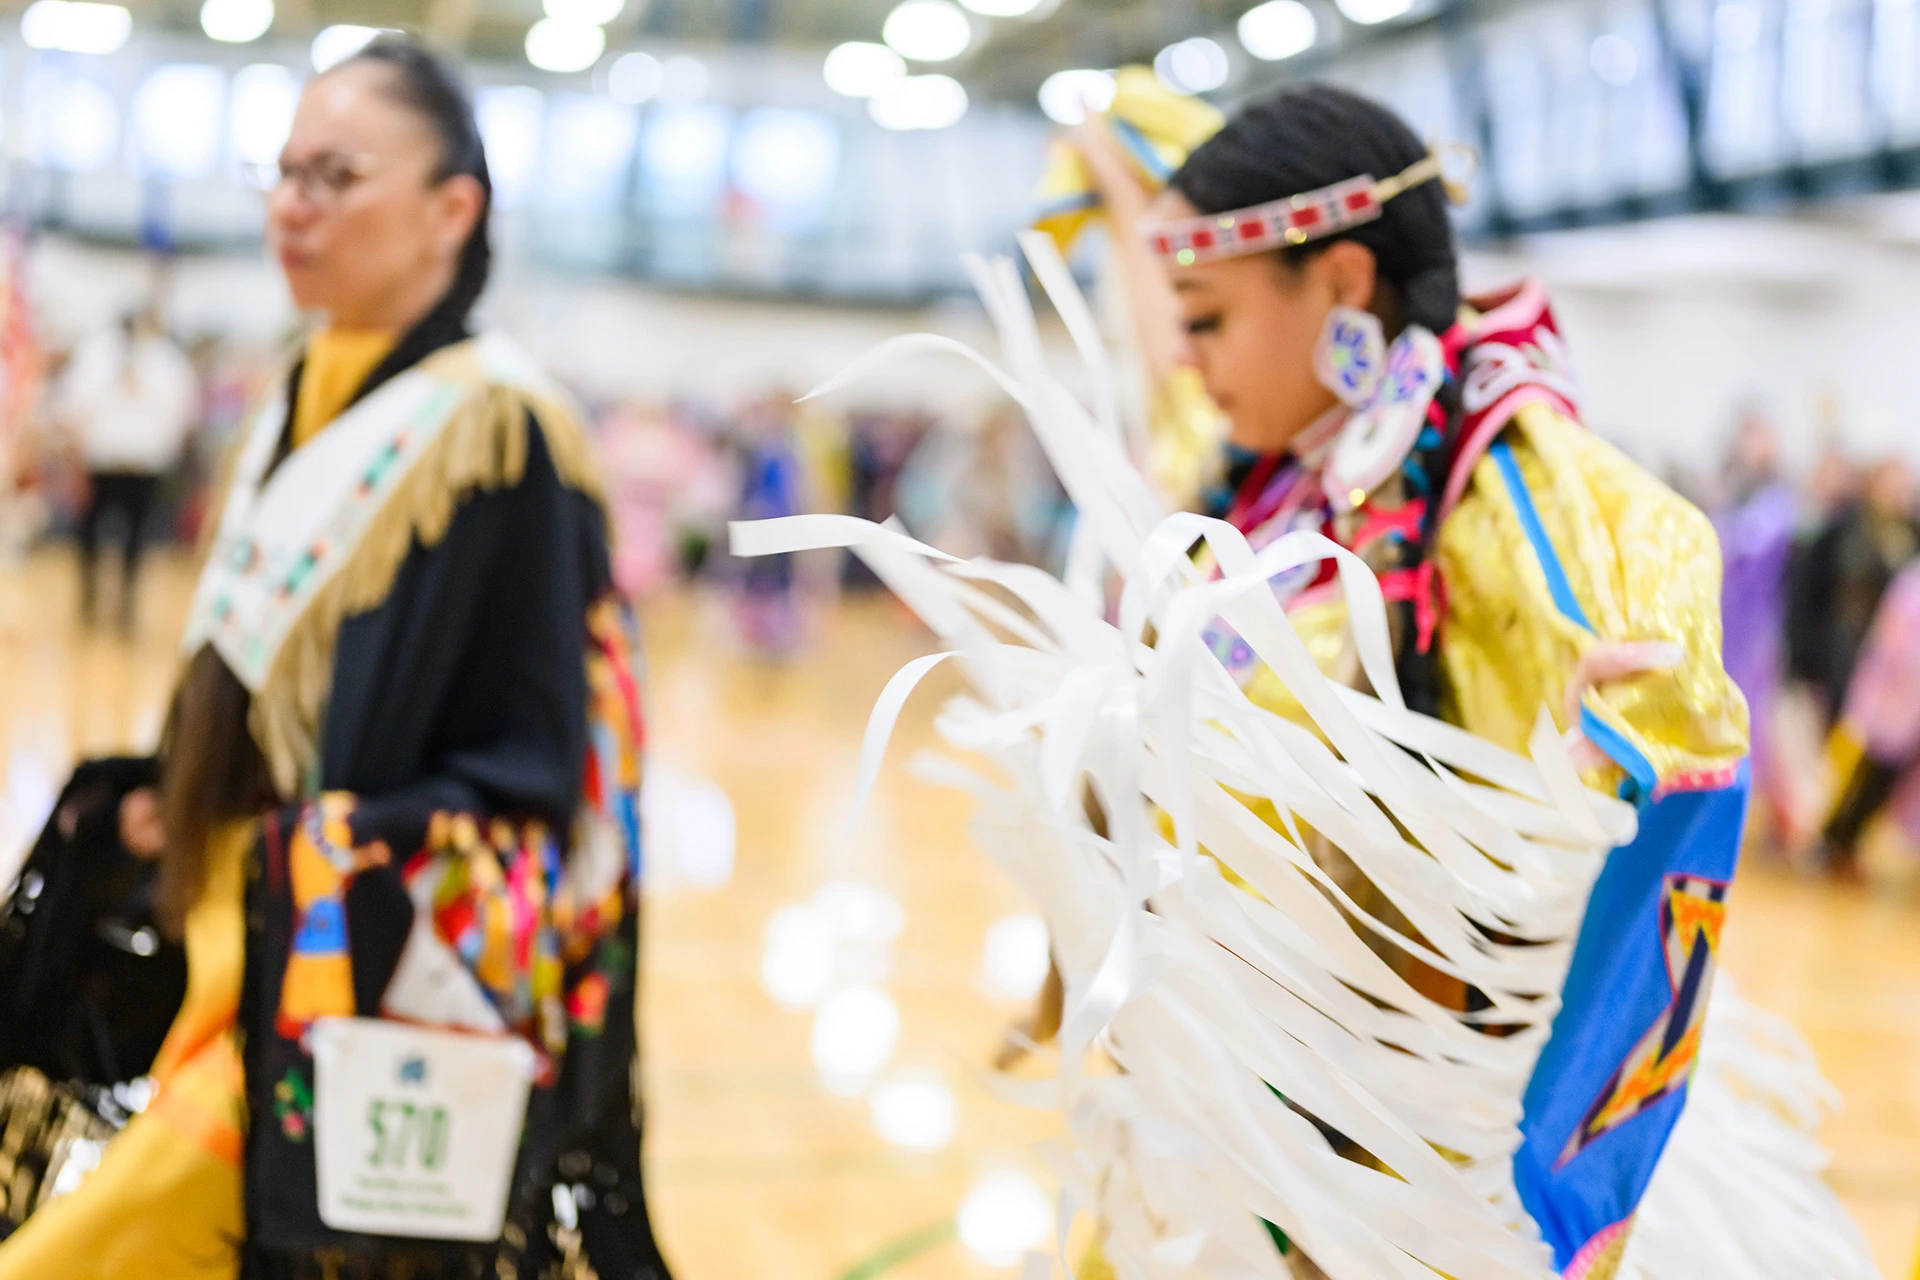 Powwow dancer's dress with white ribbons flow around her